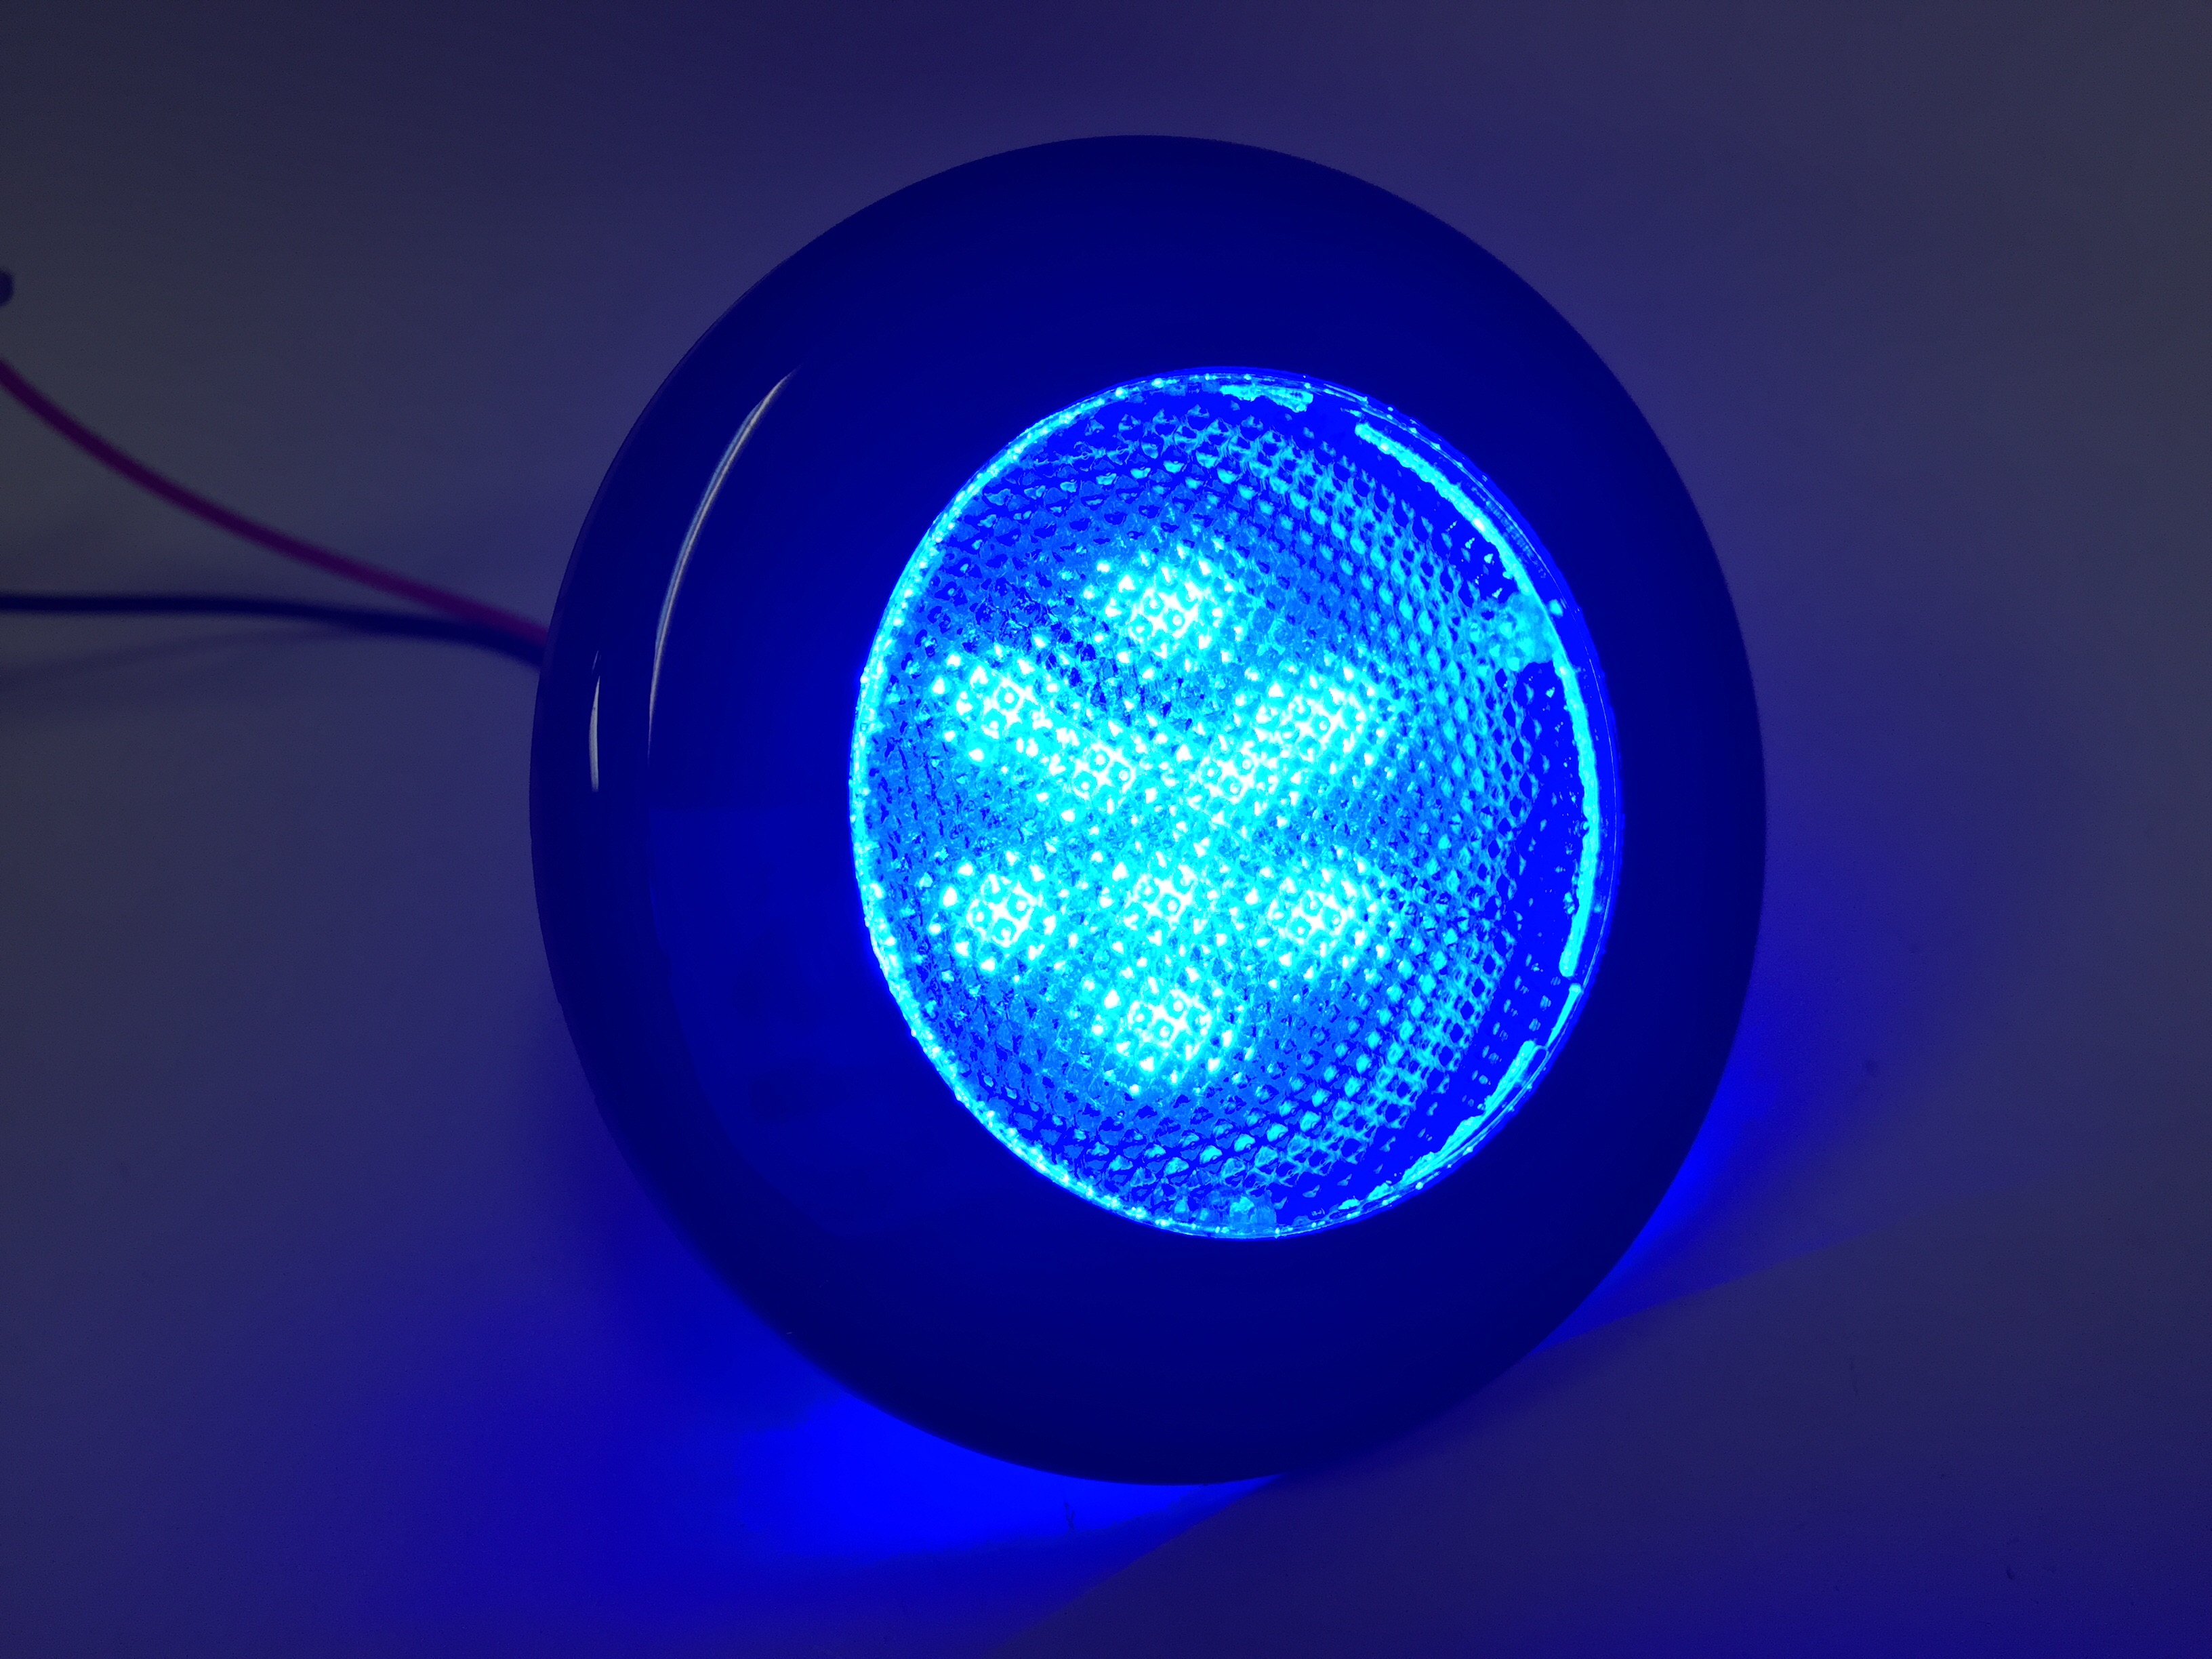 4 x LED Lamp Courtesy Lights Live Bait Tank Light Outdoor Waterproof Light Blue 